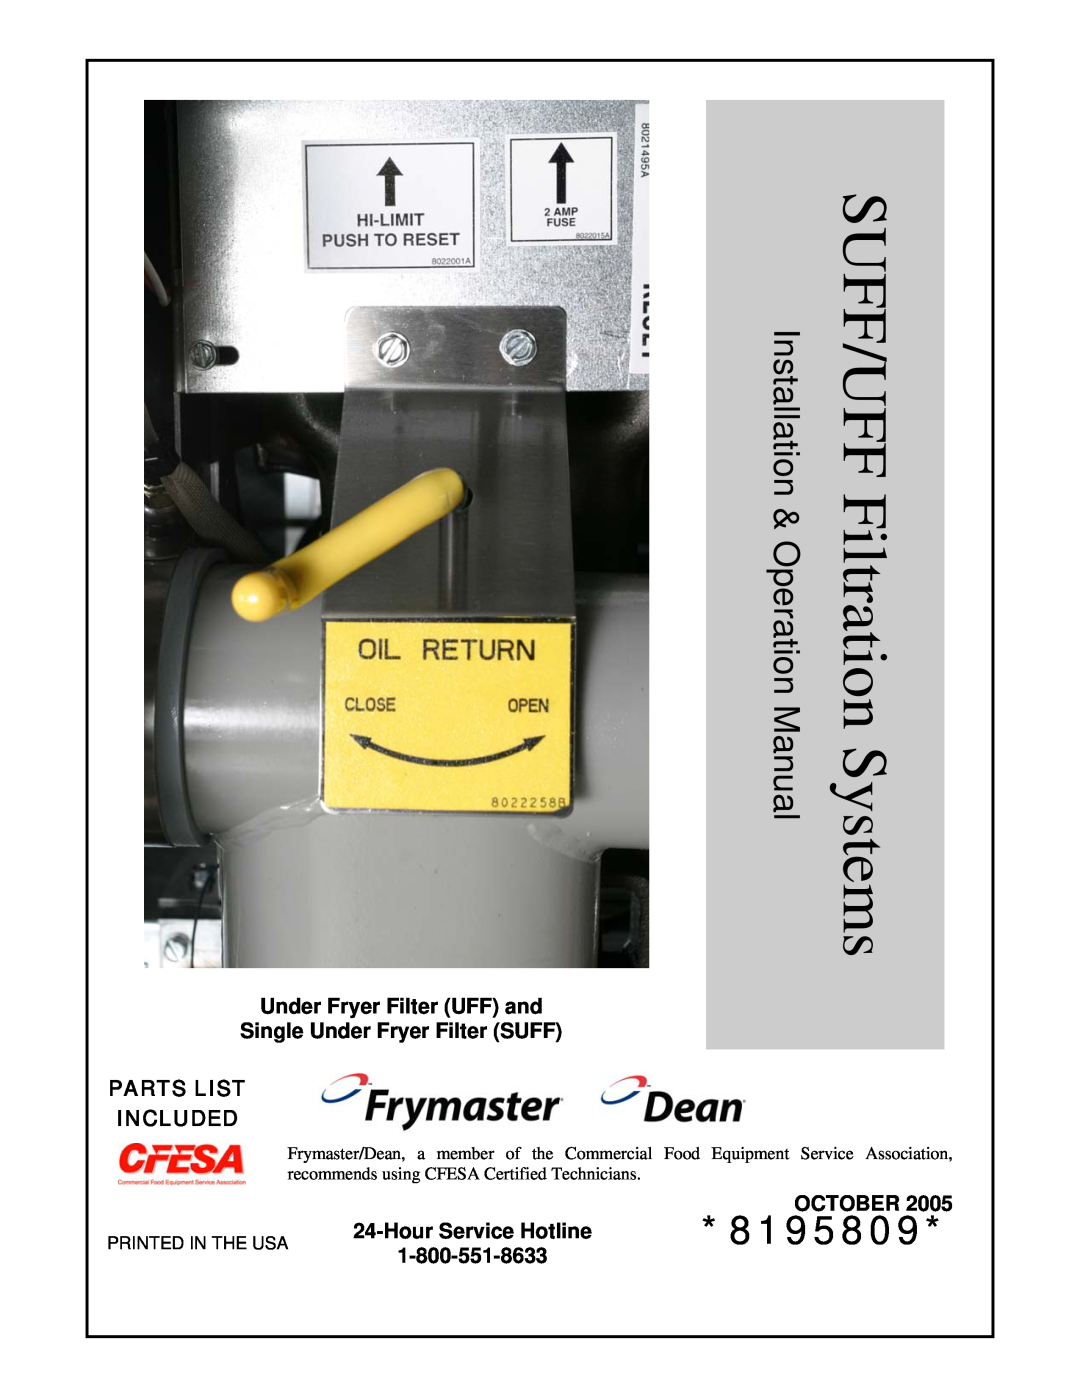 Frymaster Single Under Fryer Filter (SUFF) operation manual Under Fryer Filter UFF and, Included, HourService Hotline 